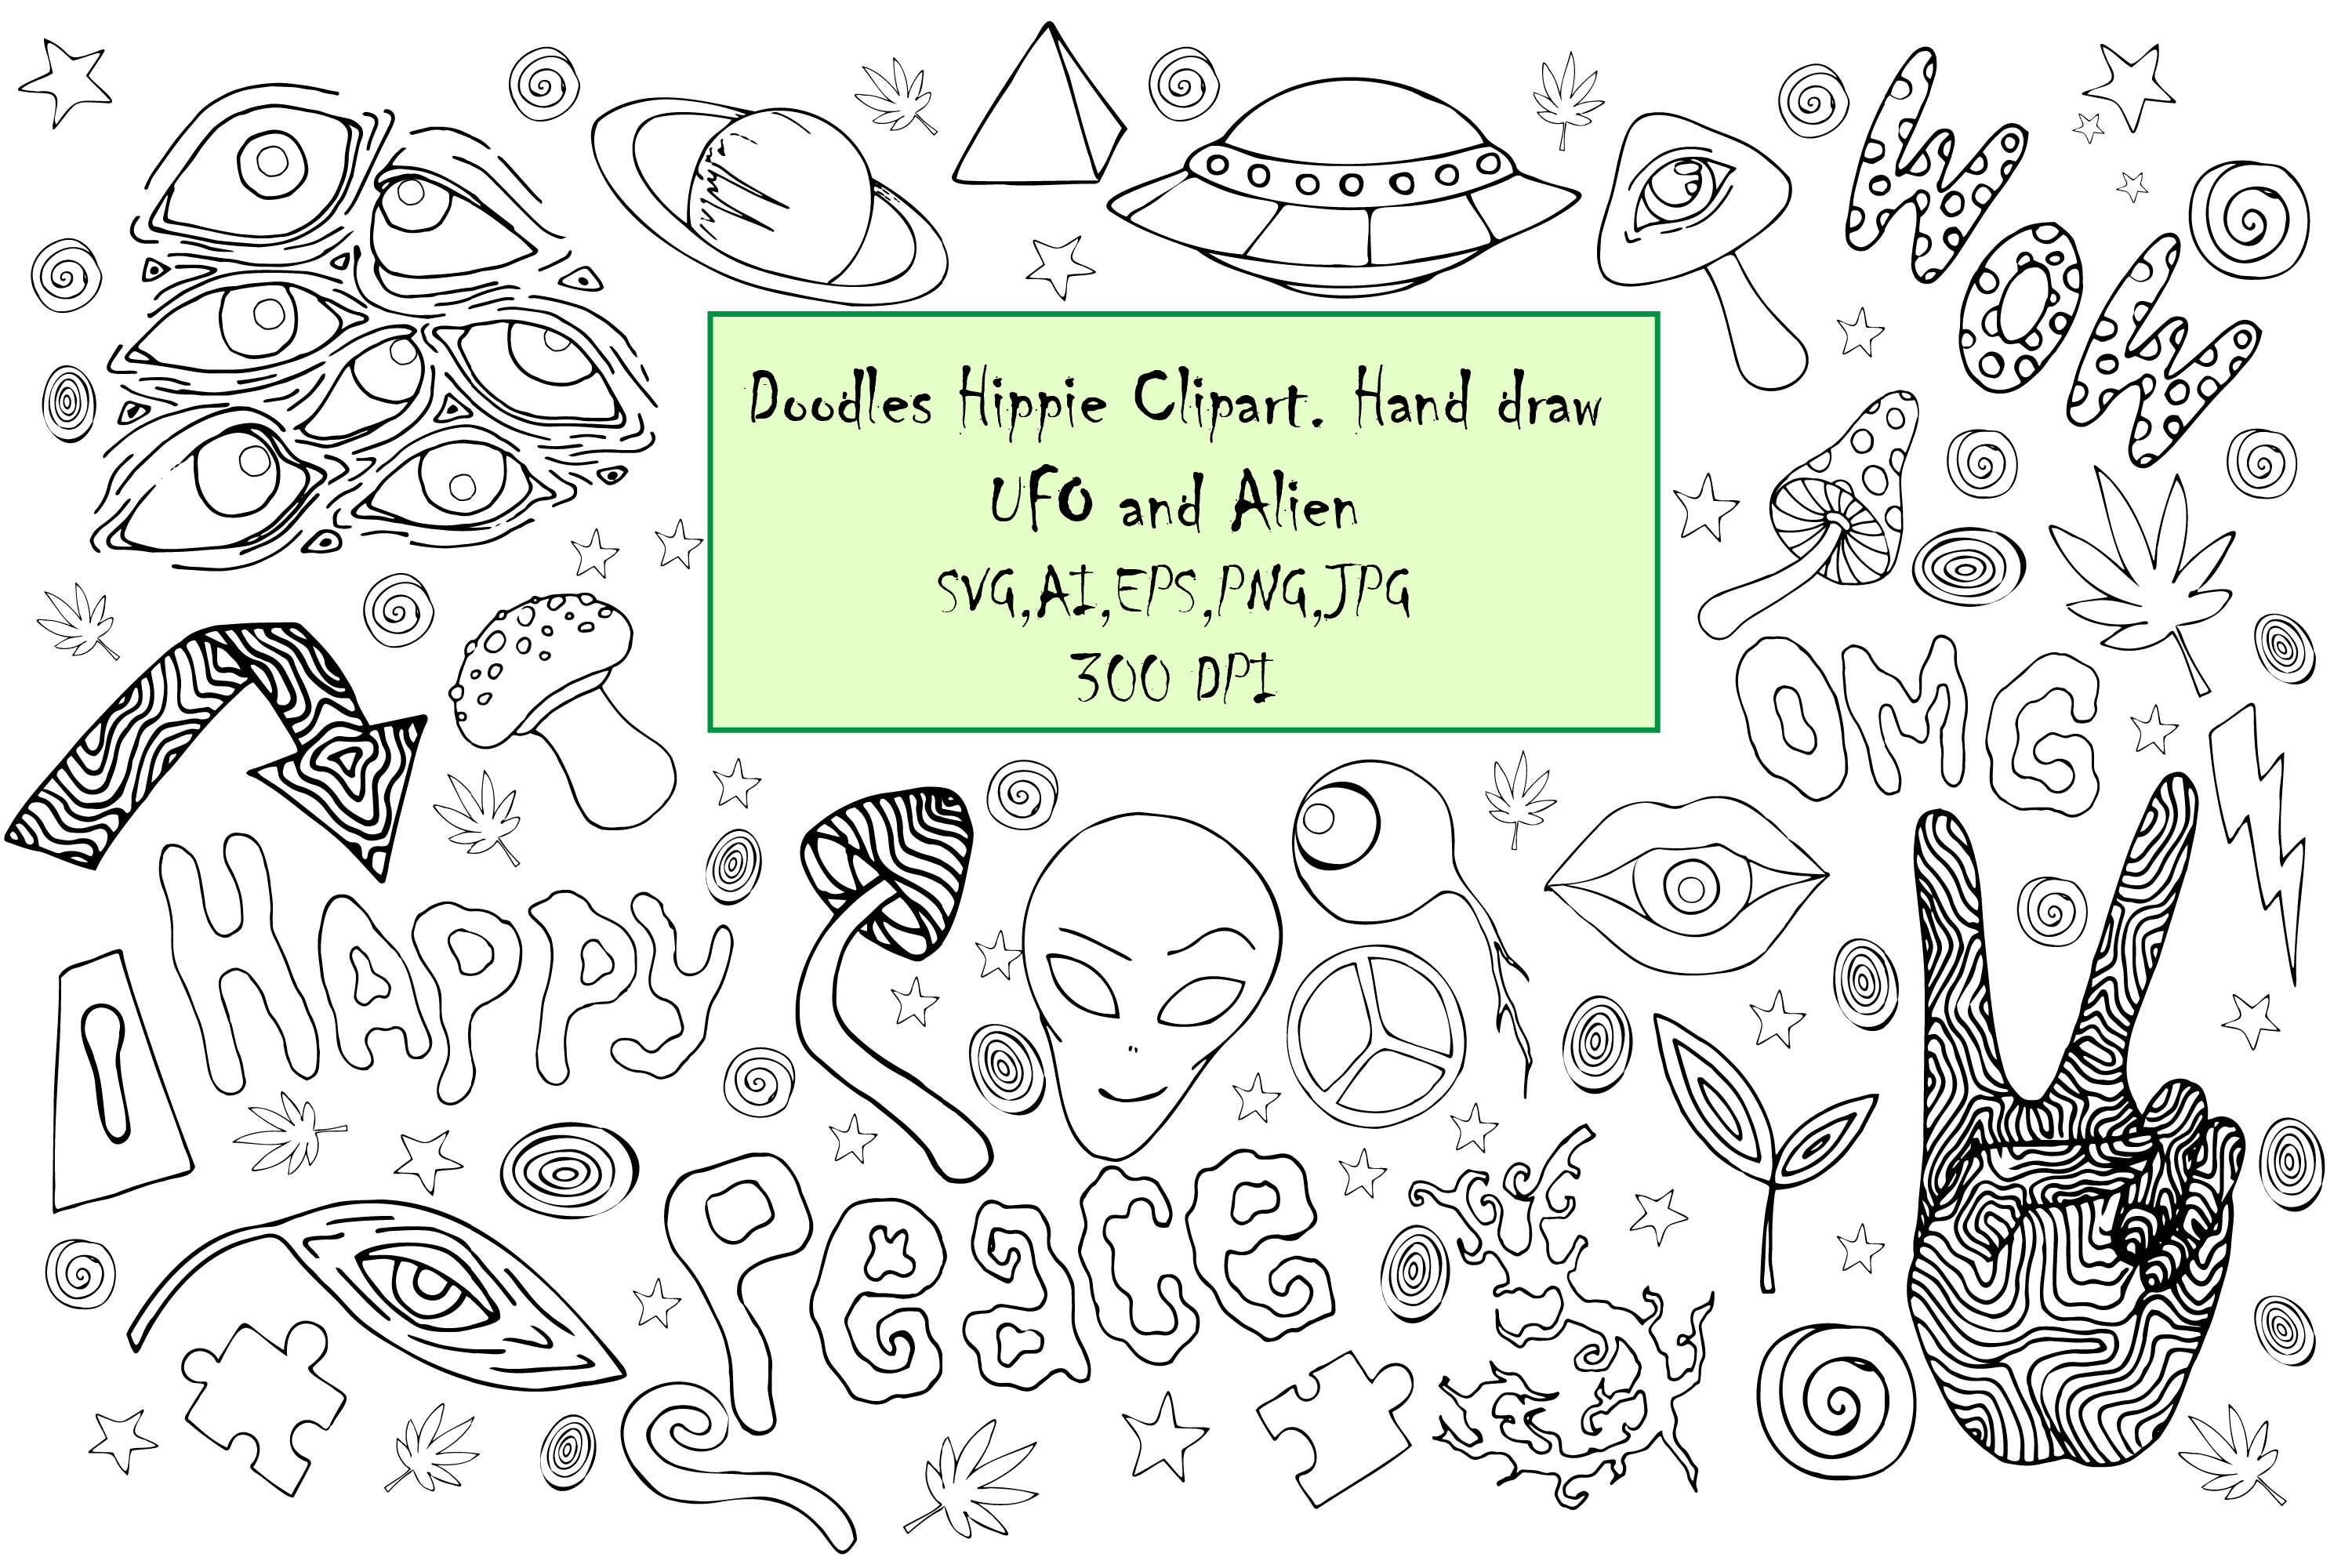 Free Trippy Hippie Background - Download in Illustrator, EPS, SVG